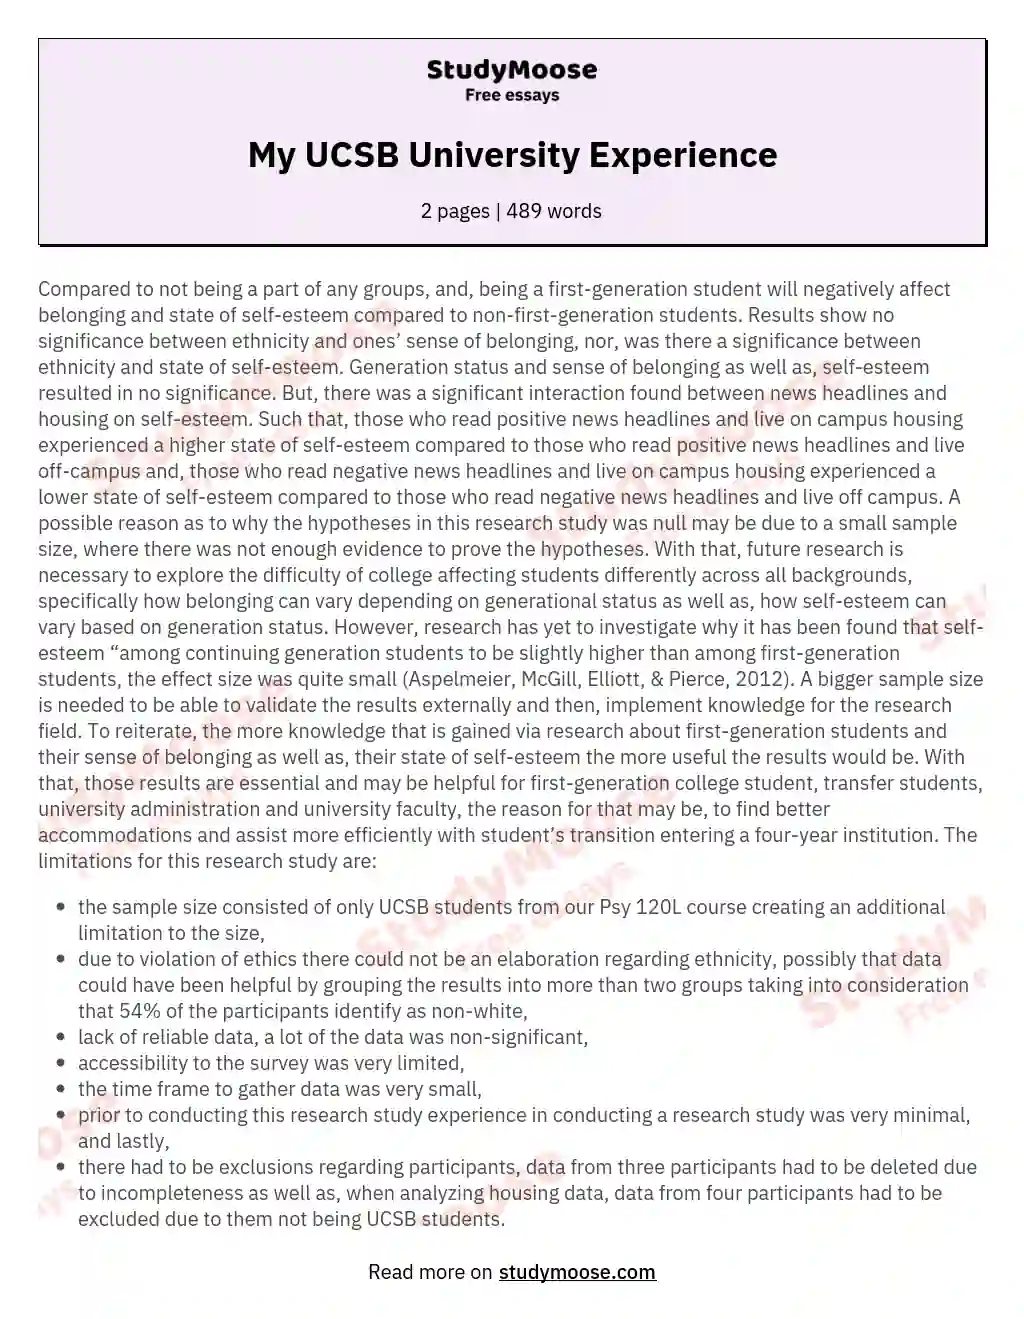 My UCSB University Experience essay